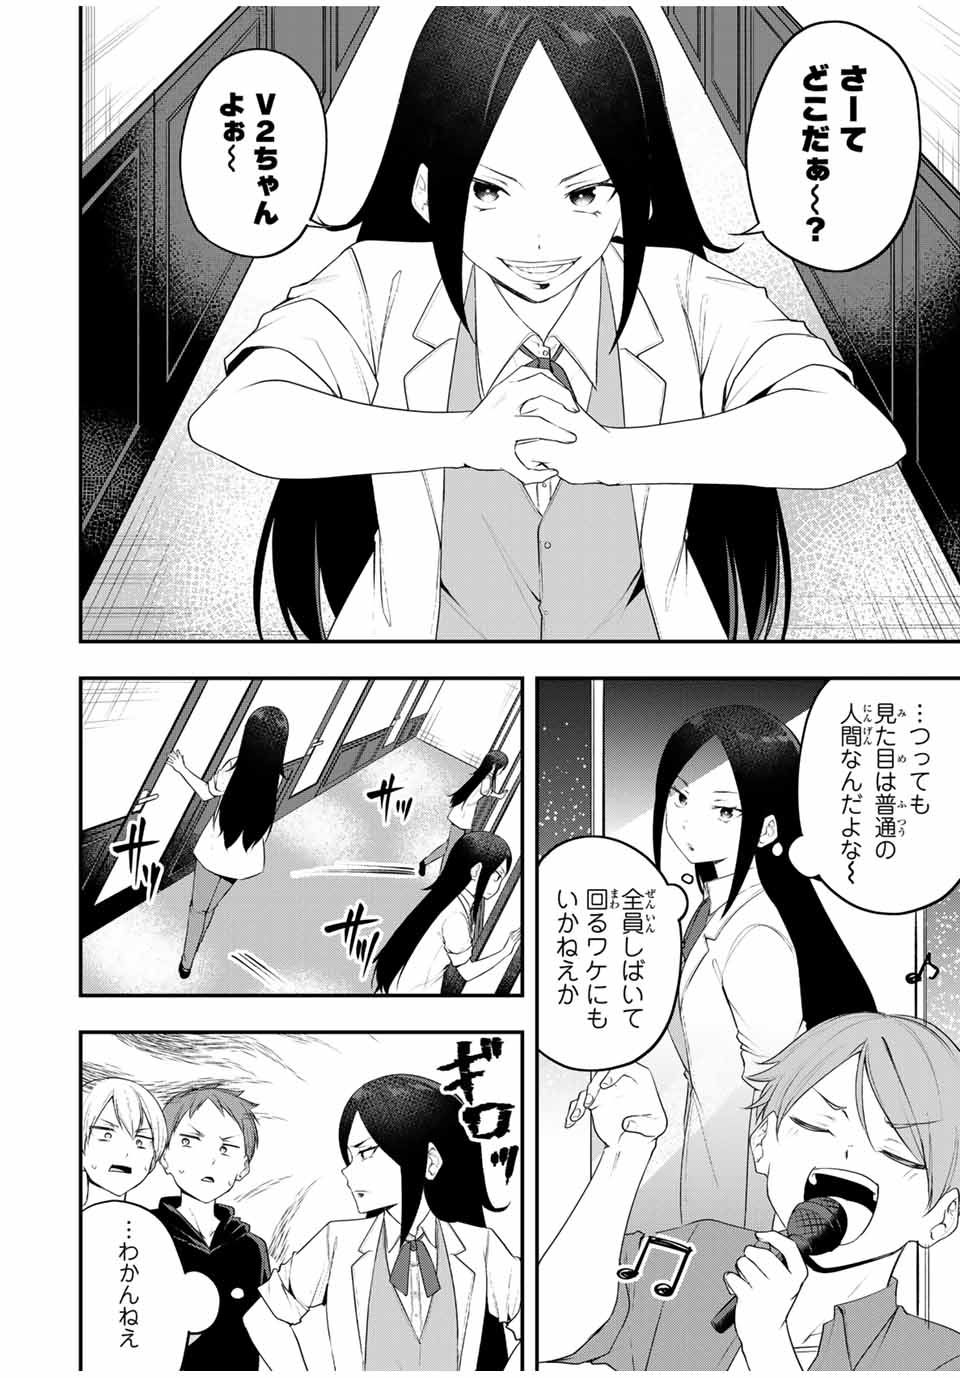 Heroine wa xx Okasegitai - Chapter 14 - Page 2